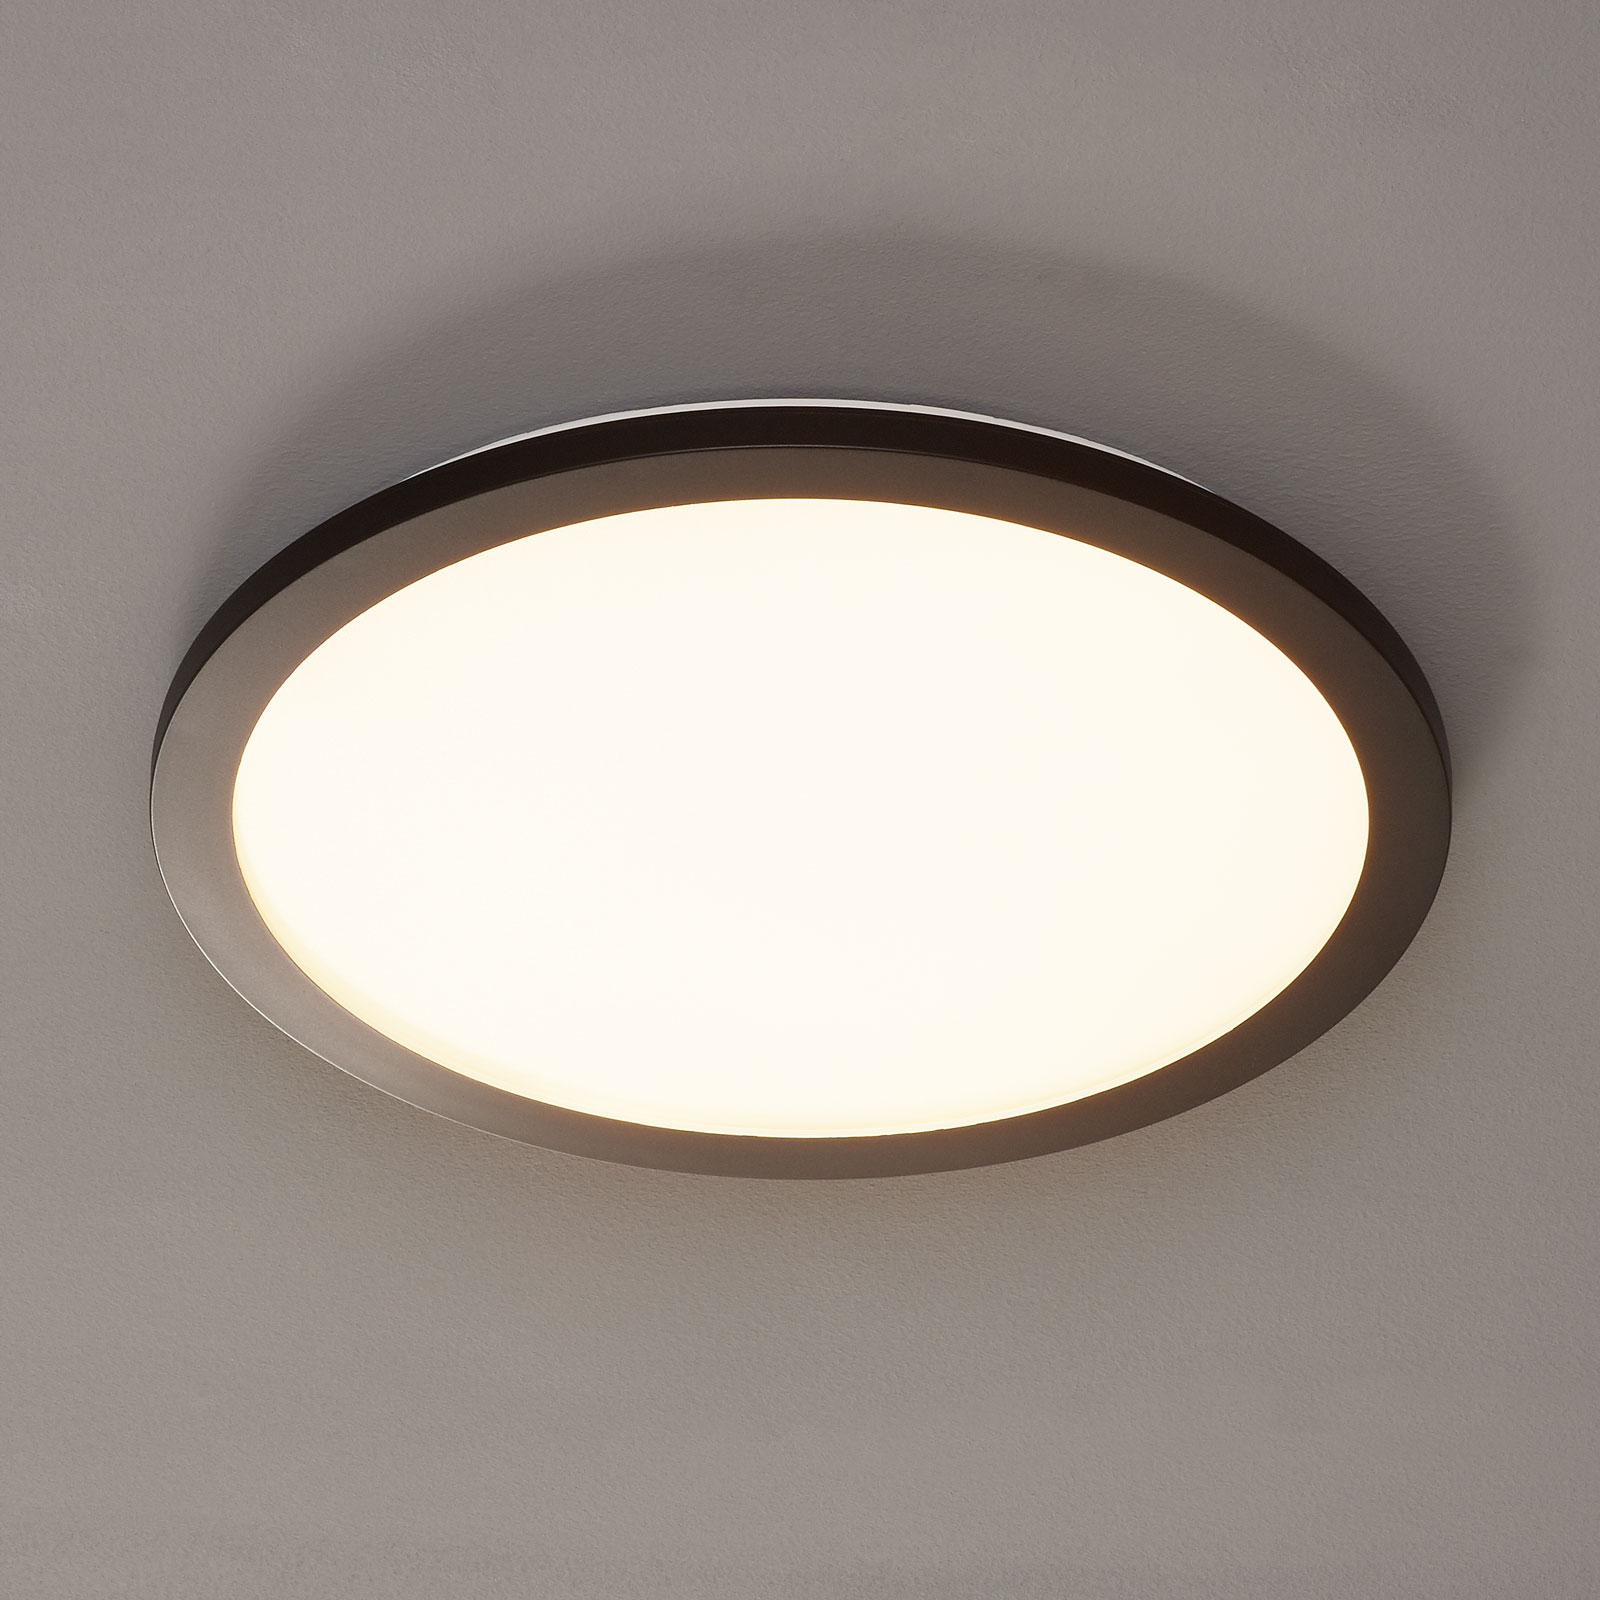 LED-taklampe Camillus, rund, Ø 40 cm